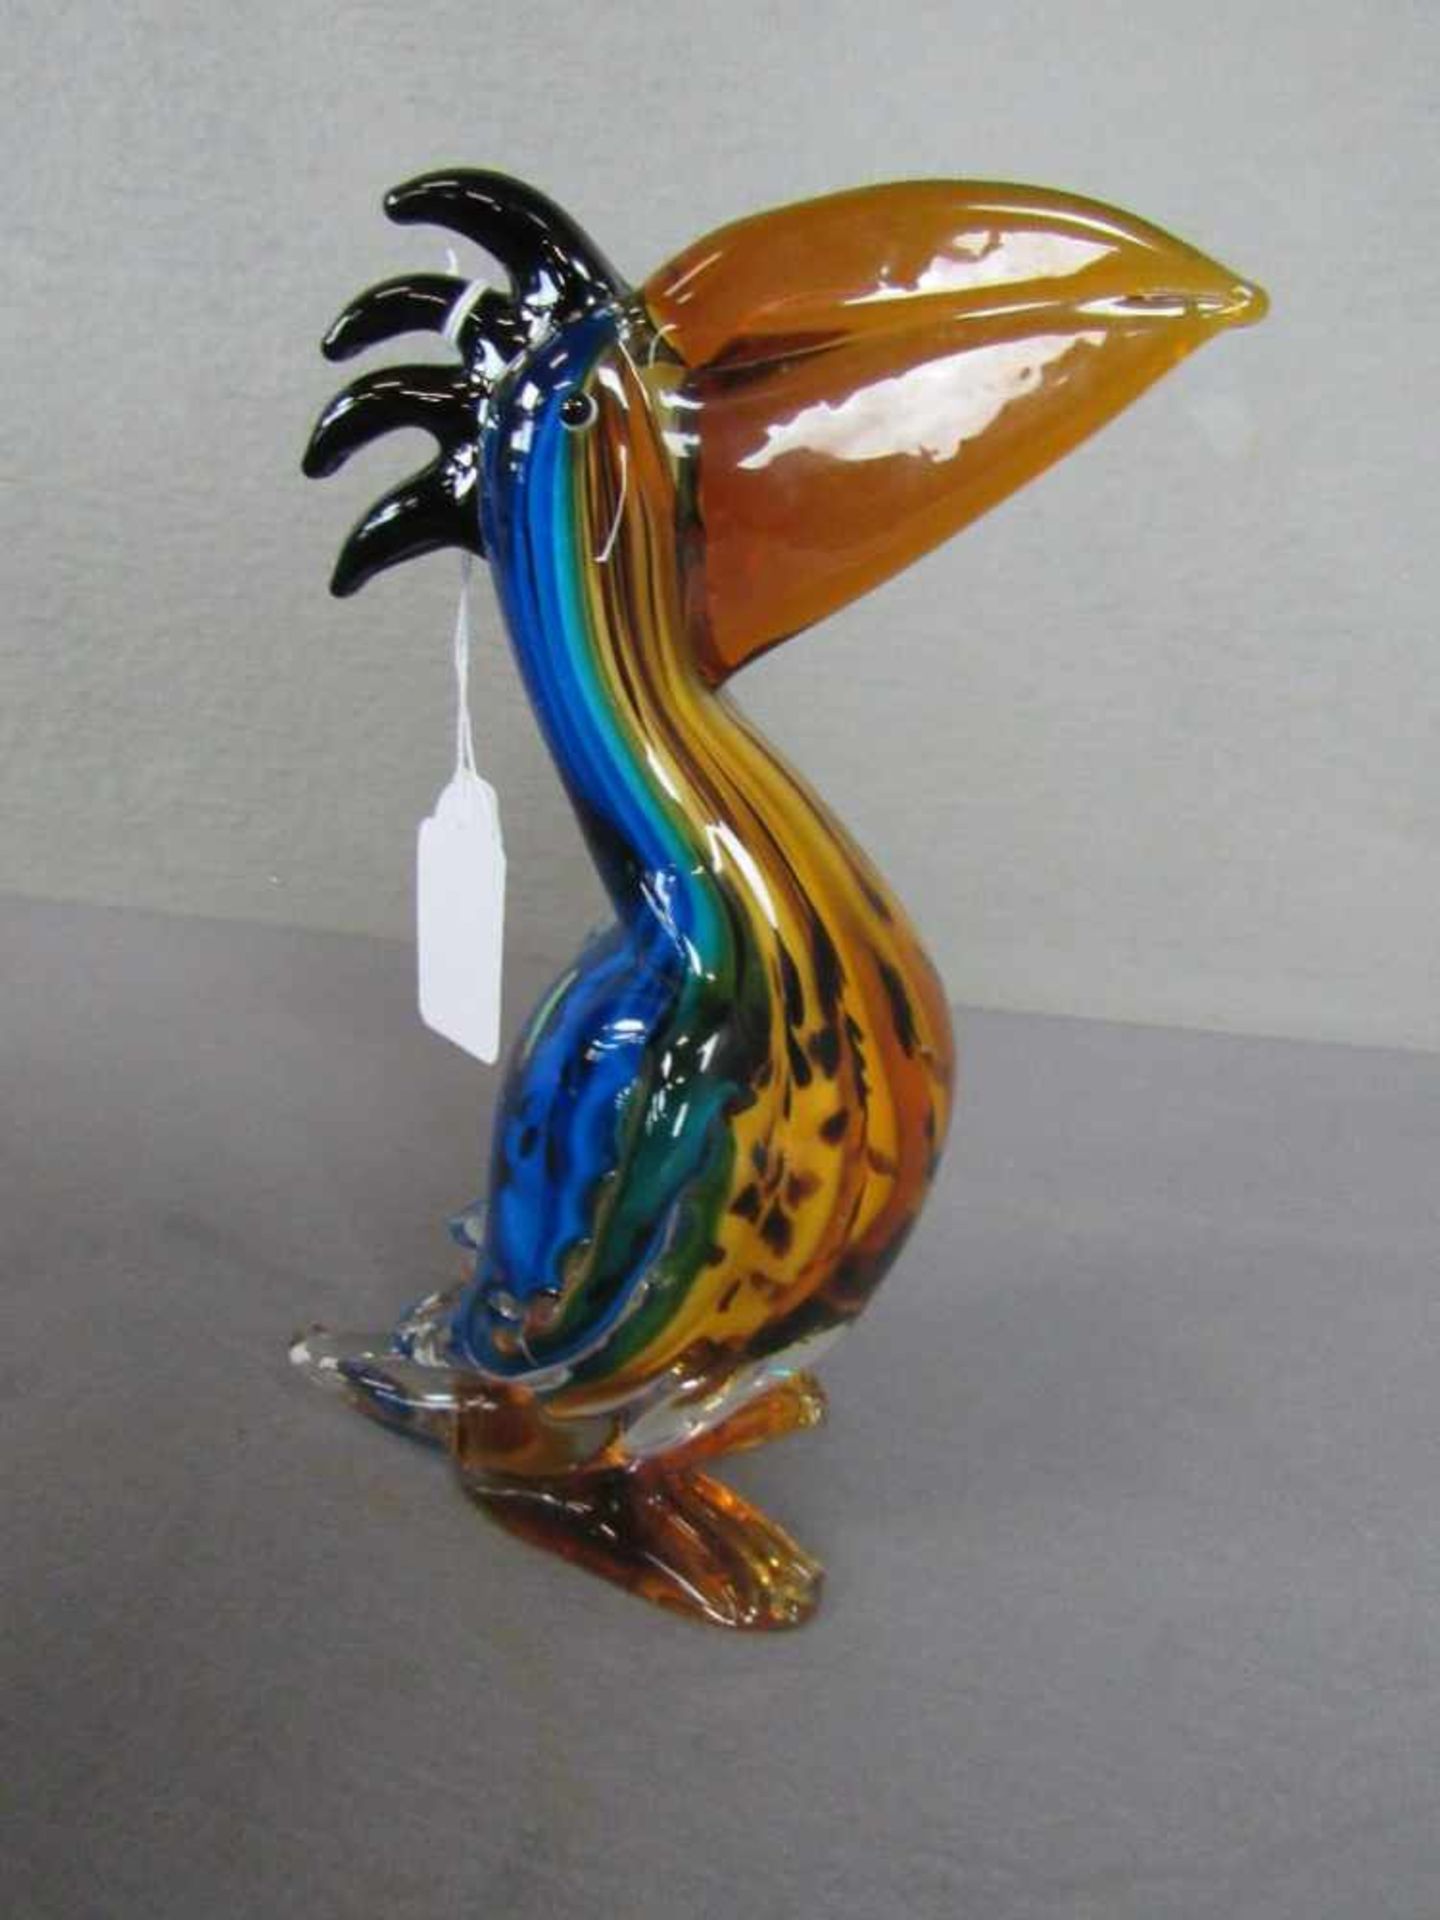 Glasskulptur Pelikan farbenfroh evtl Murano 26cm hoch- - -20.00 % buyer's premium on the hammer